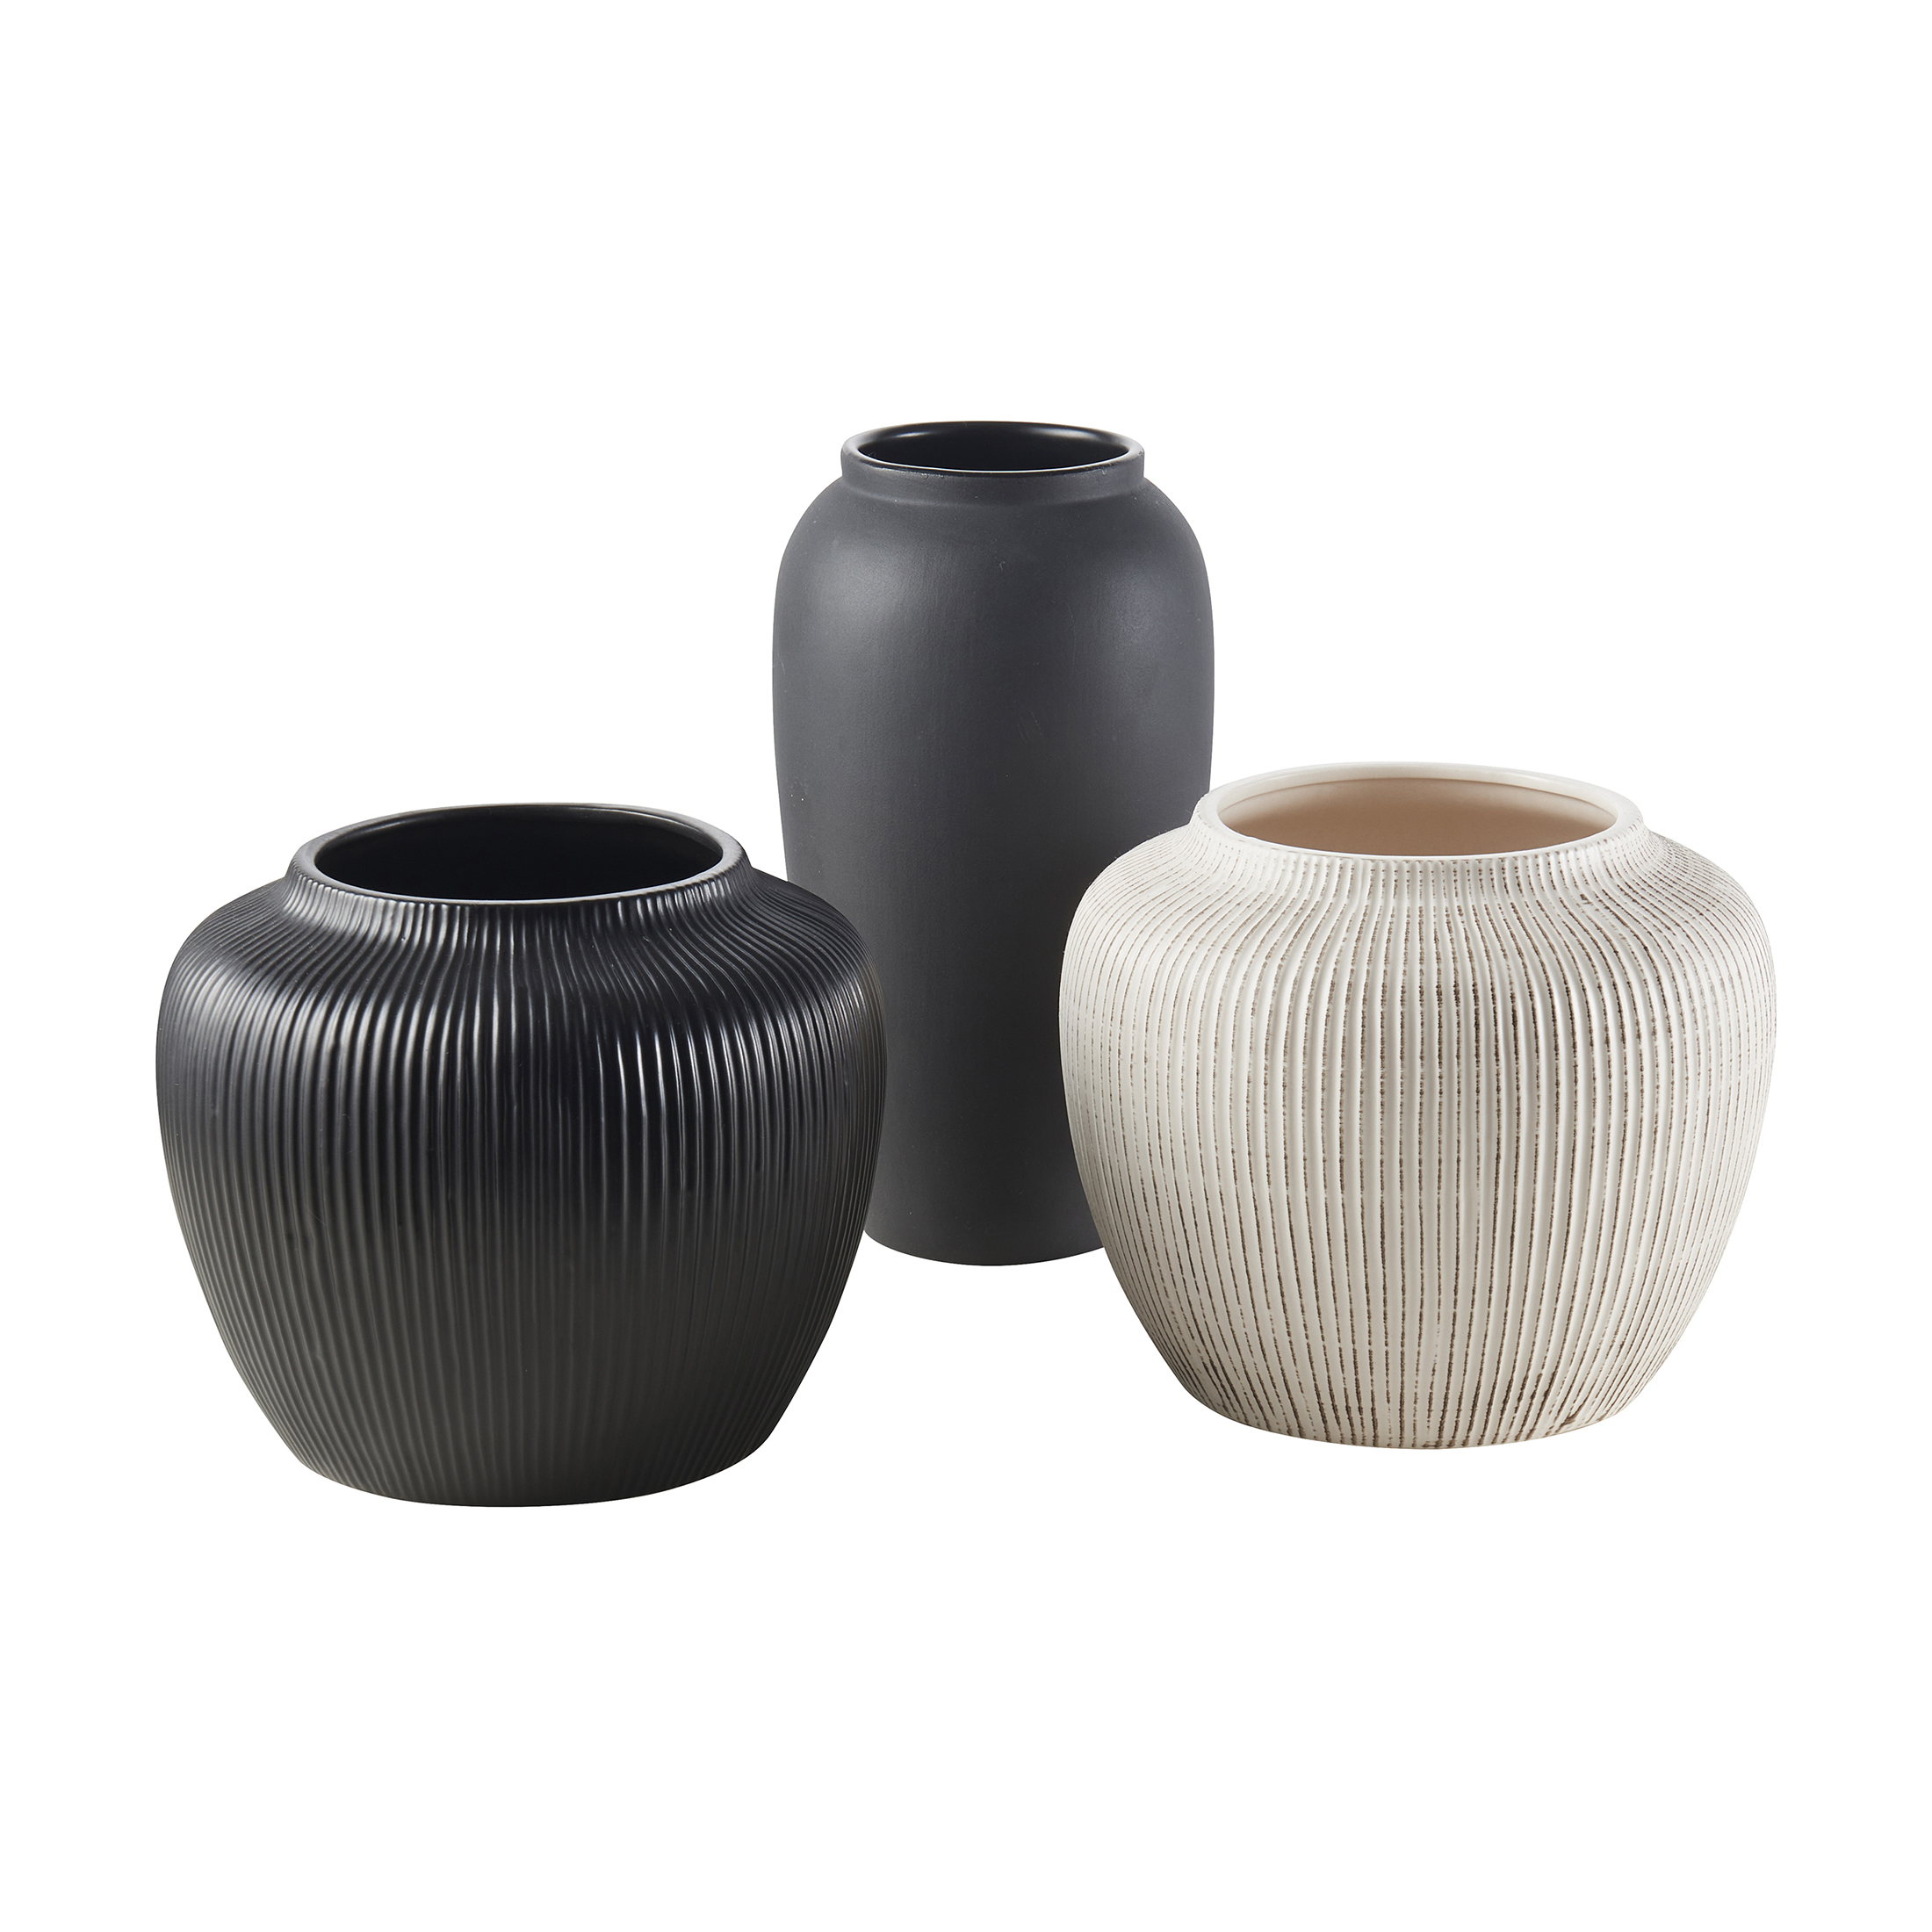 My Texas House 5" Black Textured Stripe Round Stoneware Vase - image 4 of 5